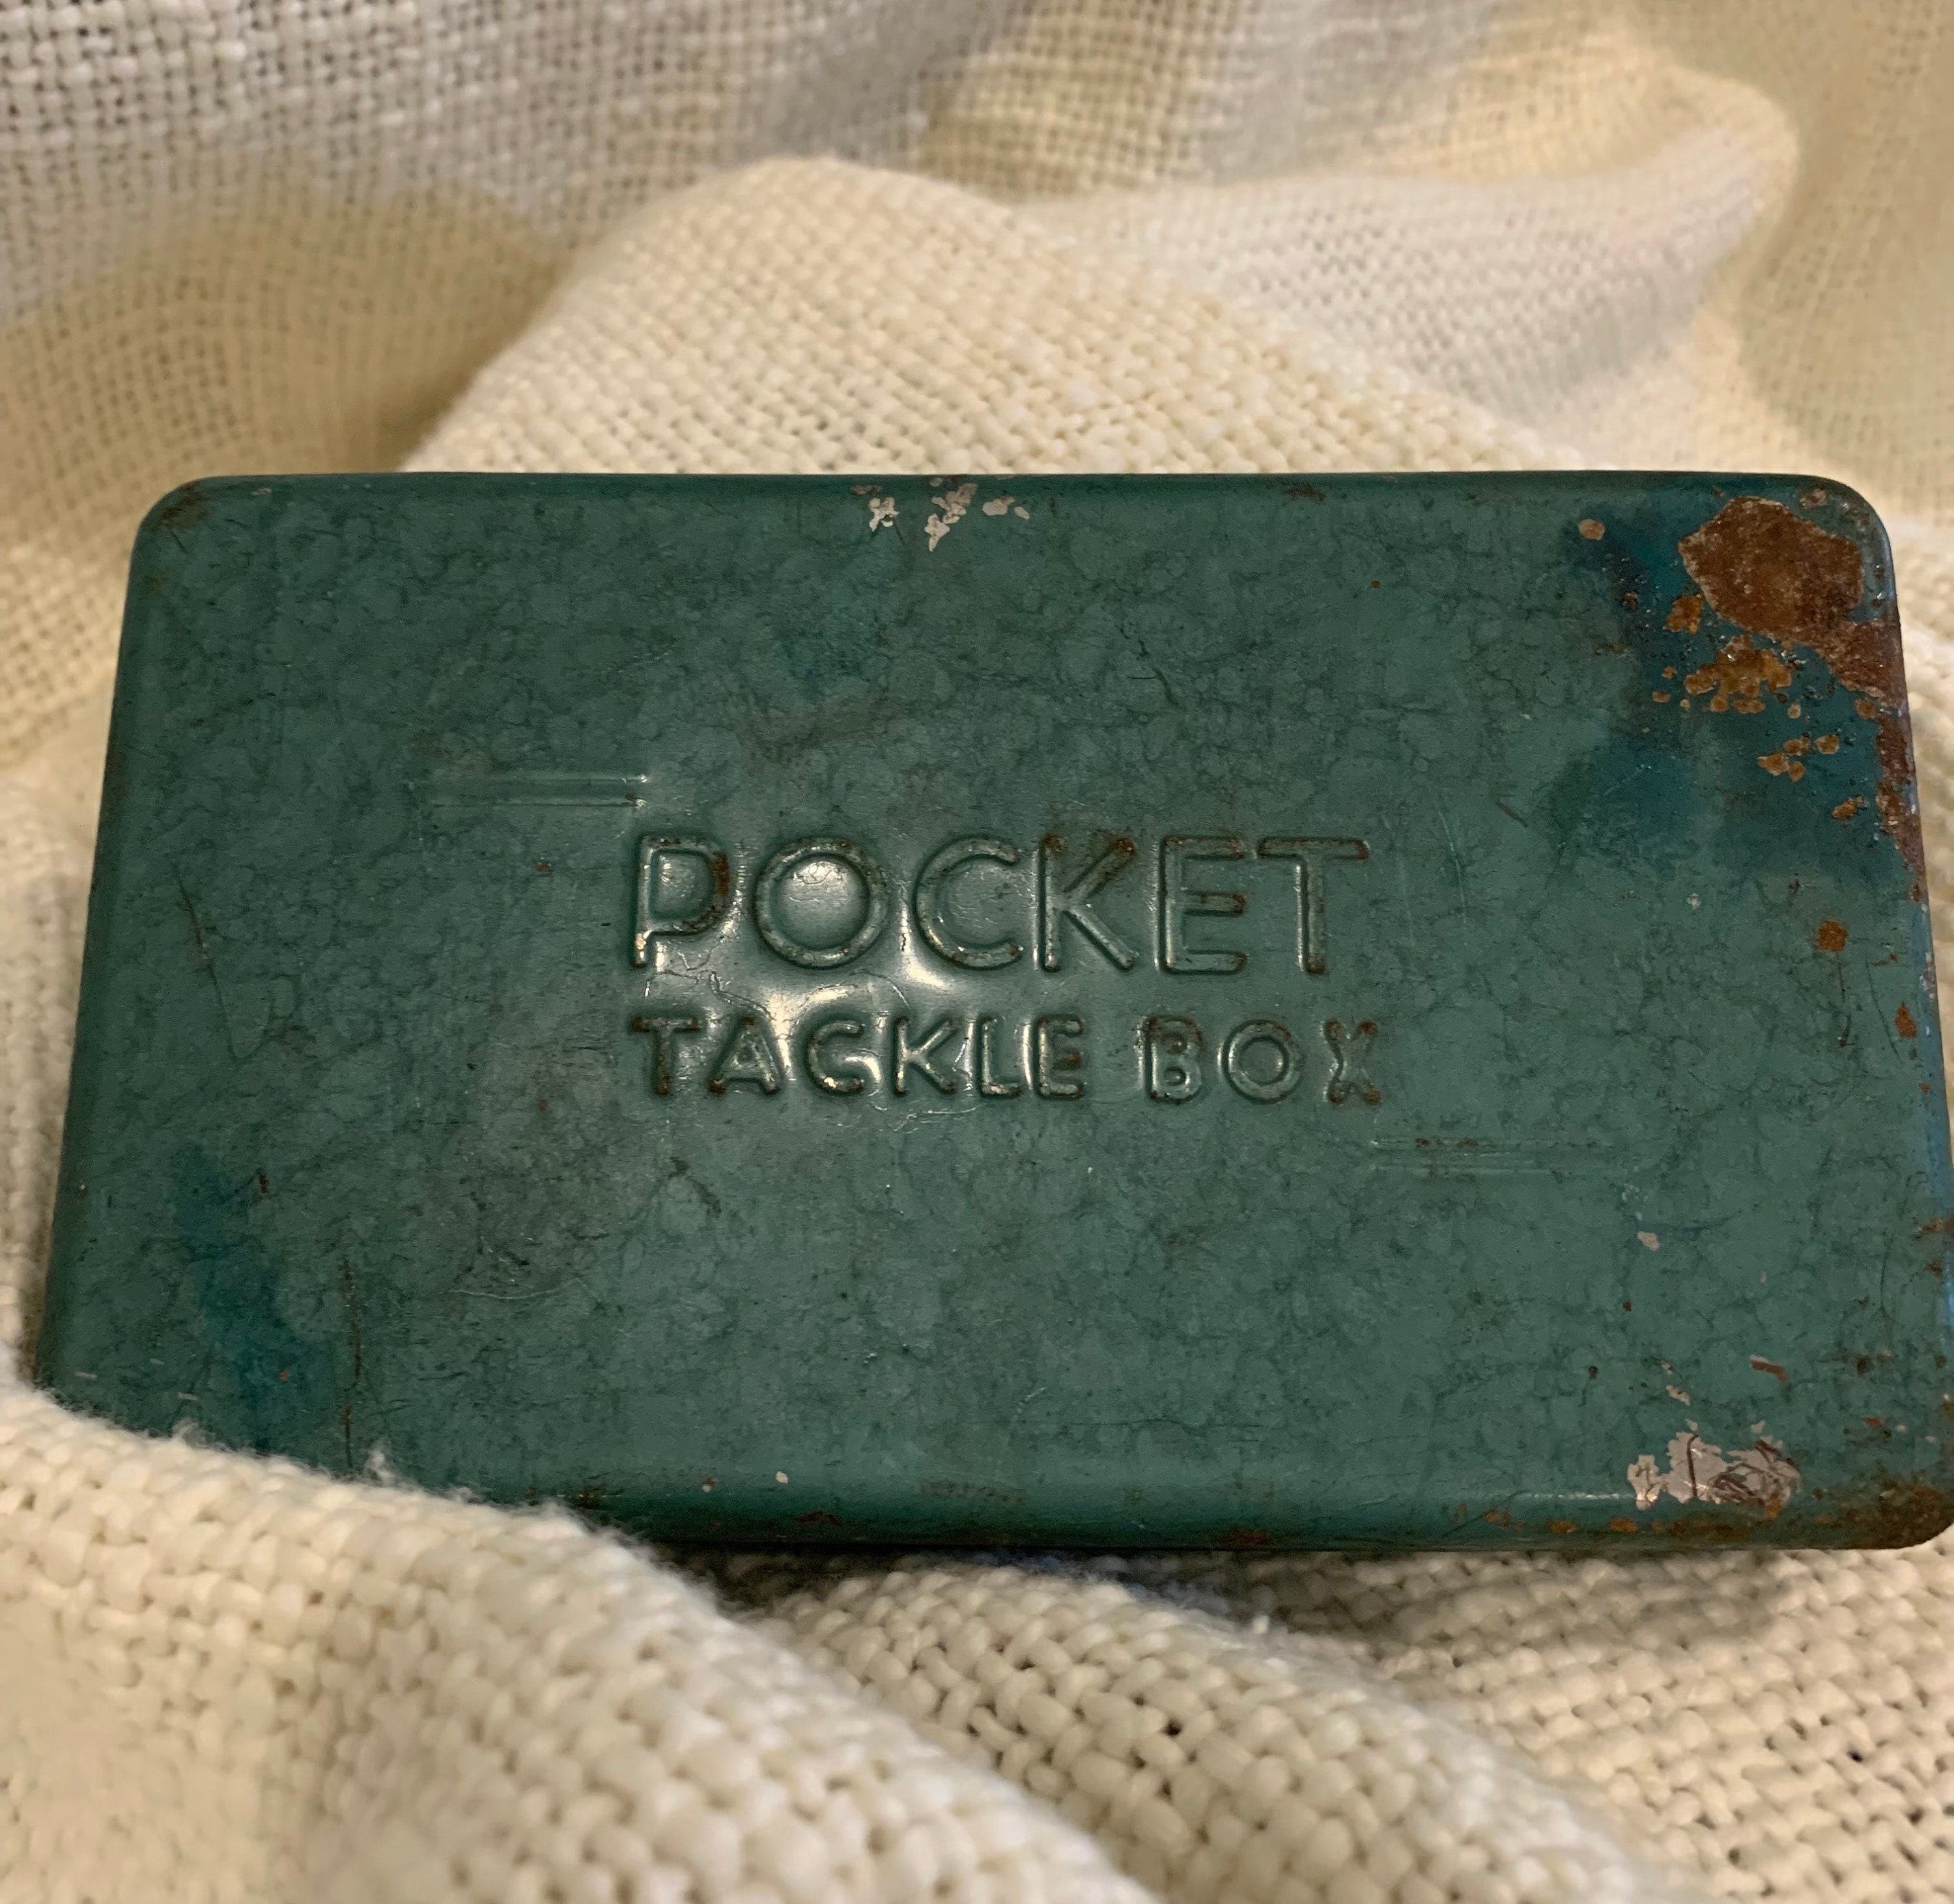 Pocket Tackle Box -  Canada